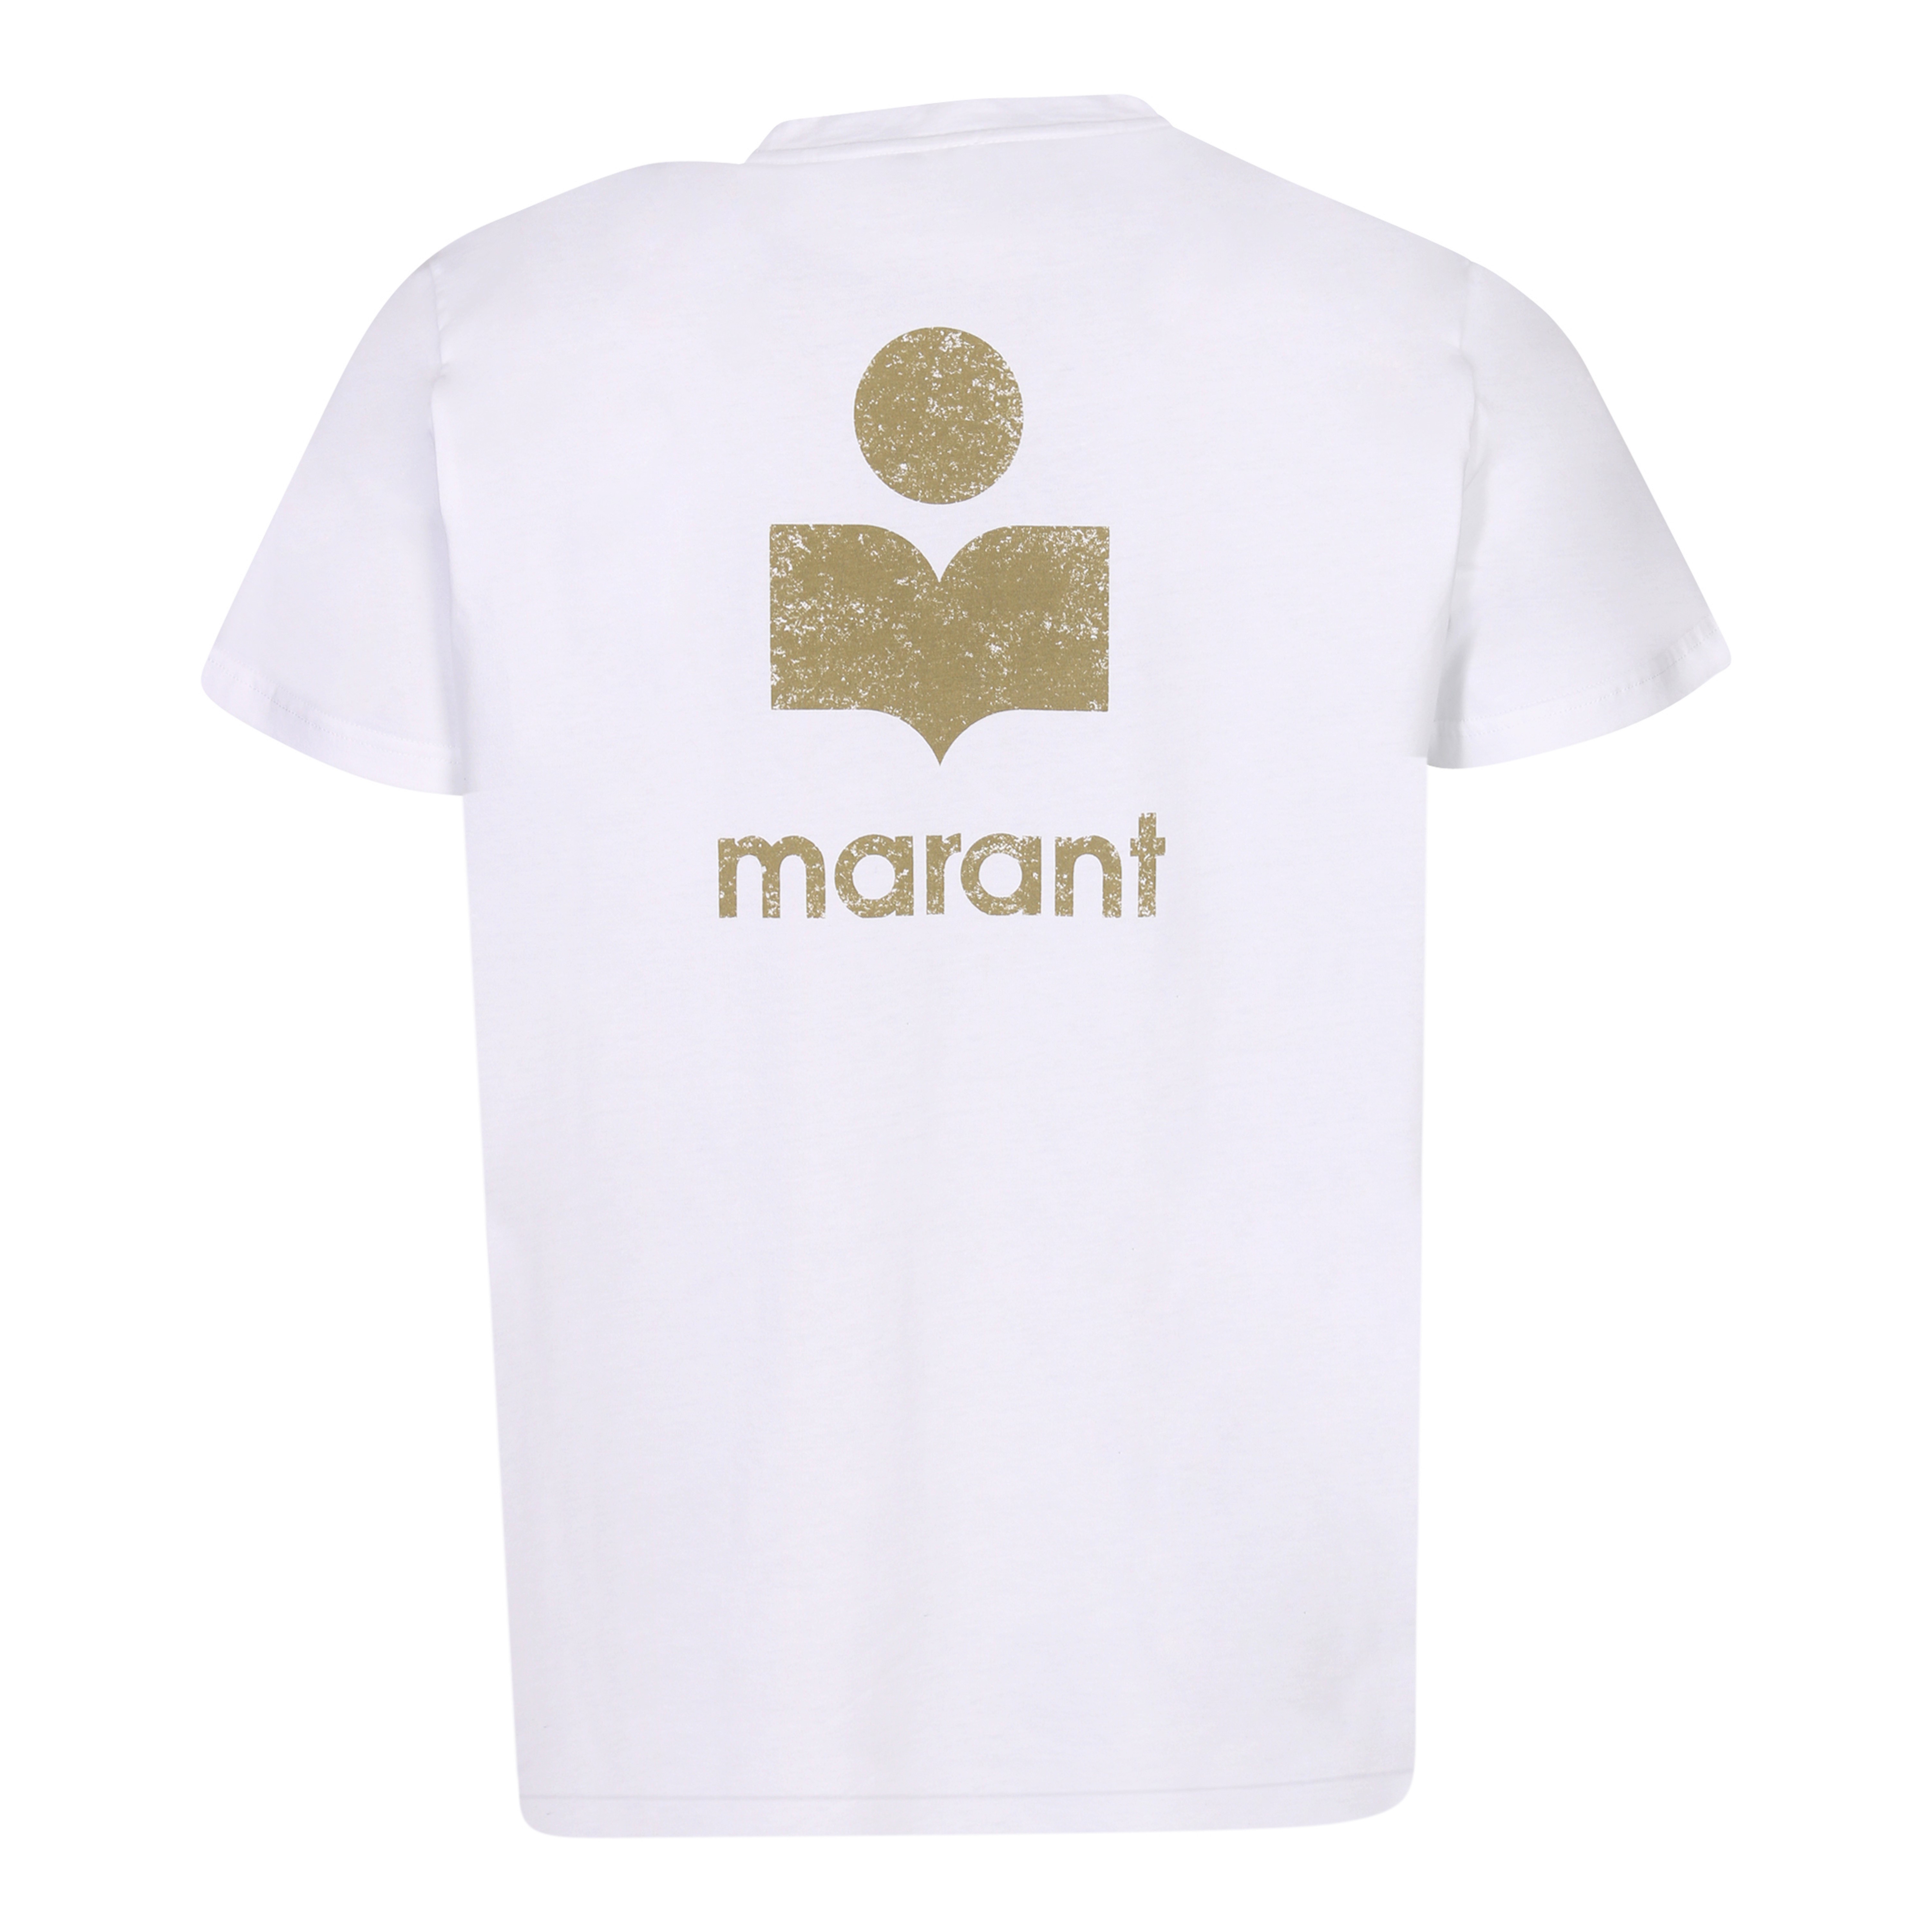 Isabel Marant Zafferh T-Shirt in White/Khaki S